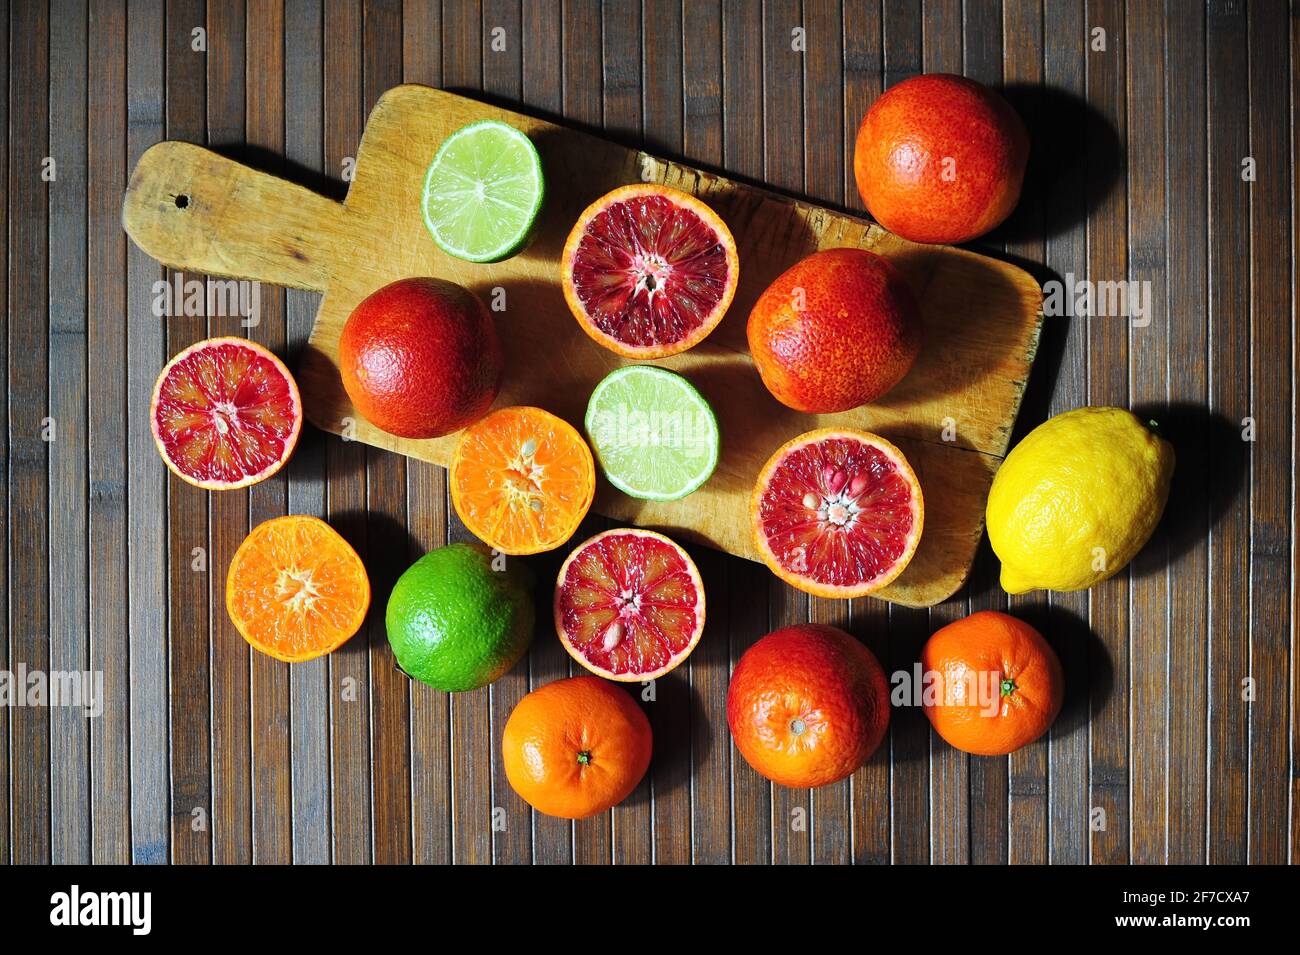 Red sicilian oranges, lime, lemon and mandarine tangerine on cutting board wooden background Stock Photo